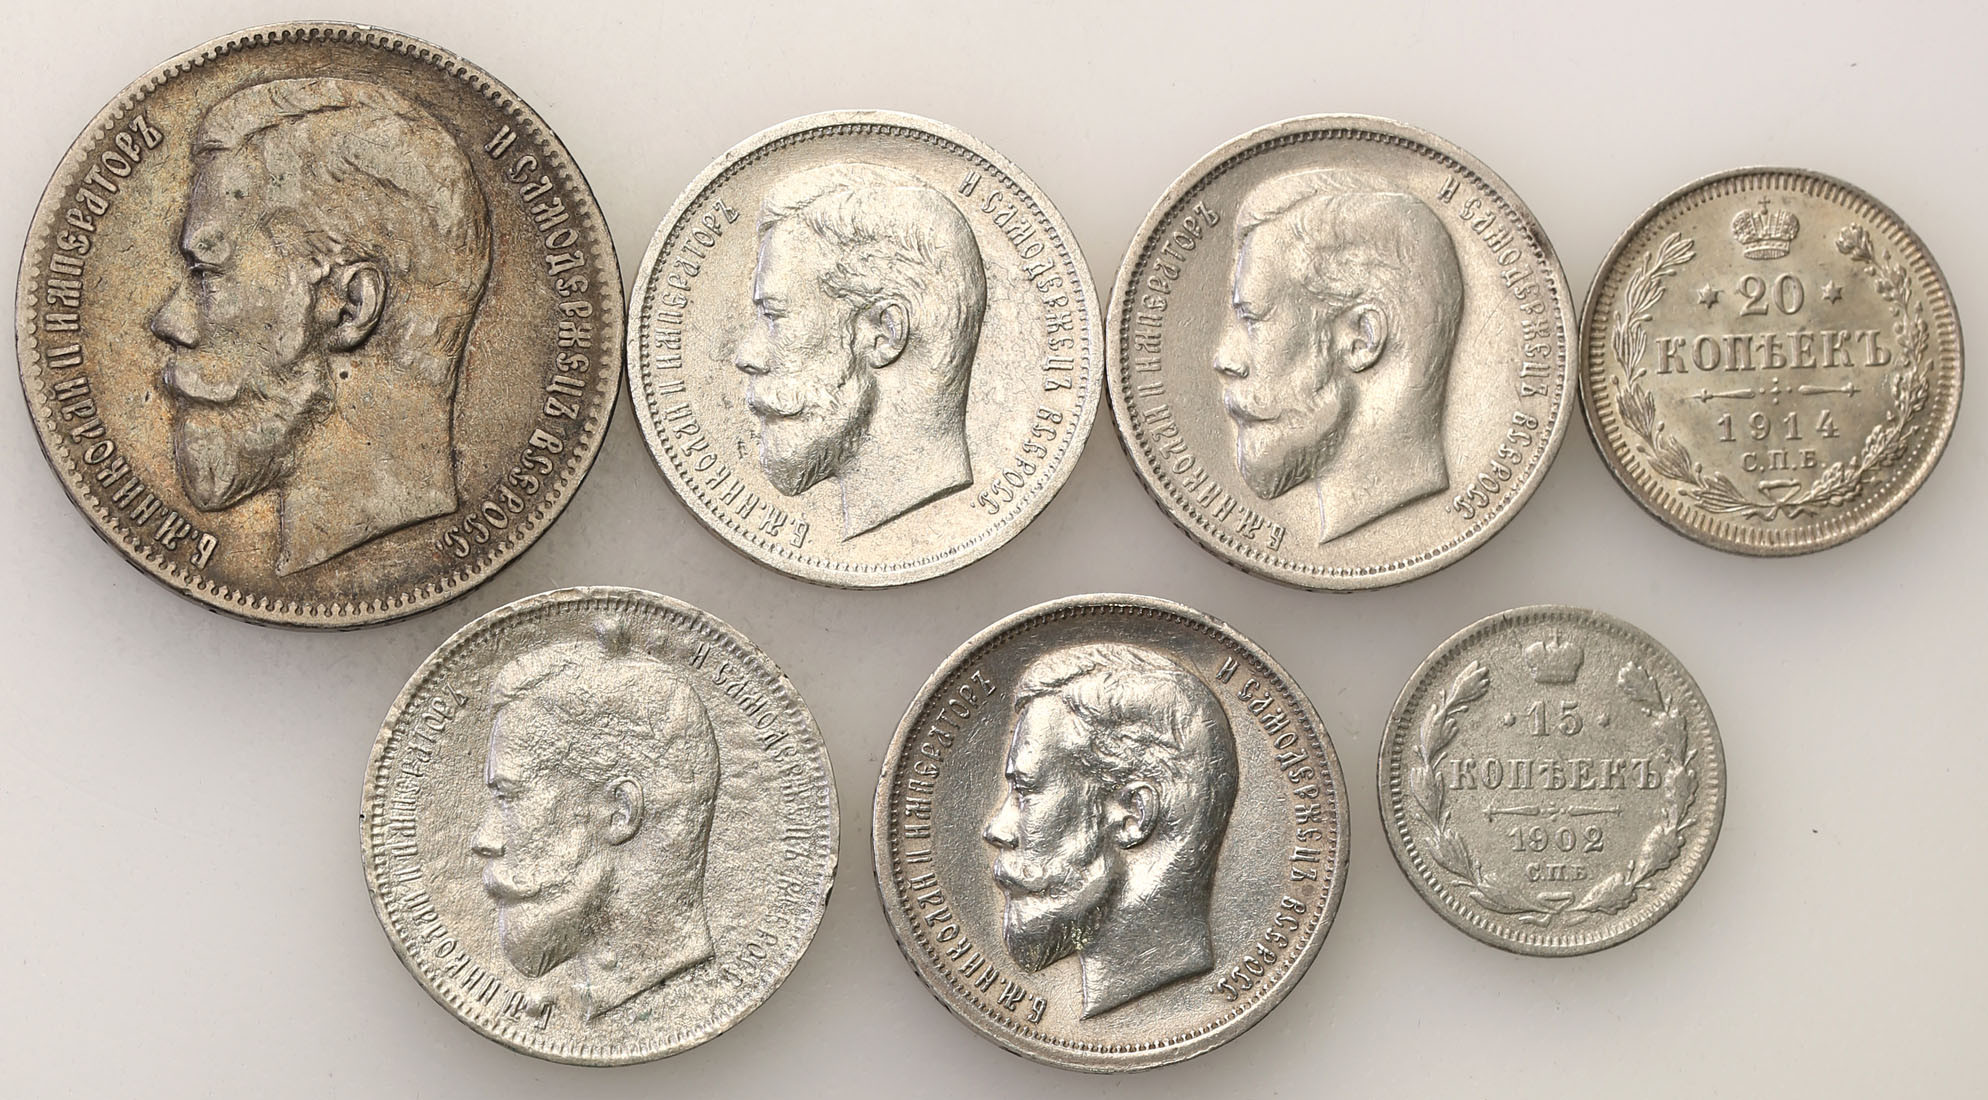 Rosja. Mikołaj II. Rubel, 4 x 50 kopiejek, 20 kopiejek, 15 kopiejek 1898-1914, zestaw 7 monet